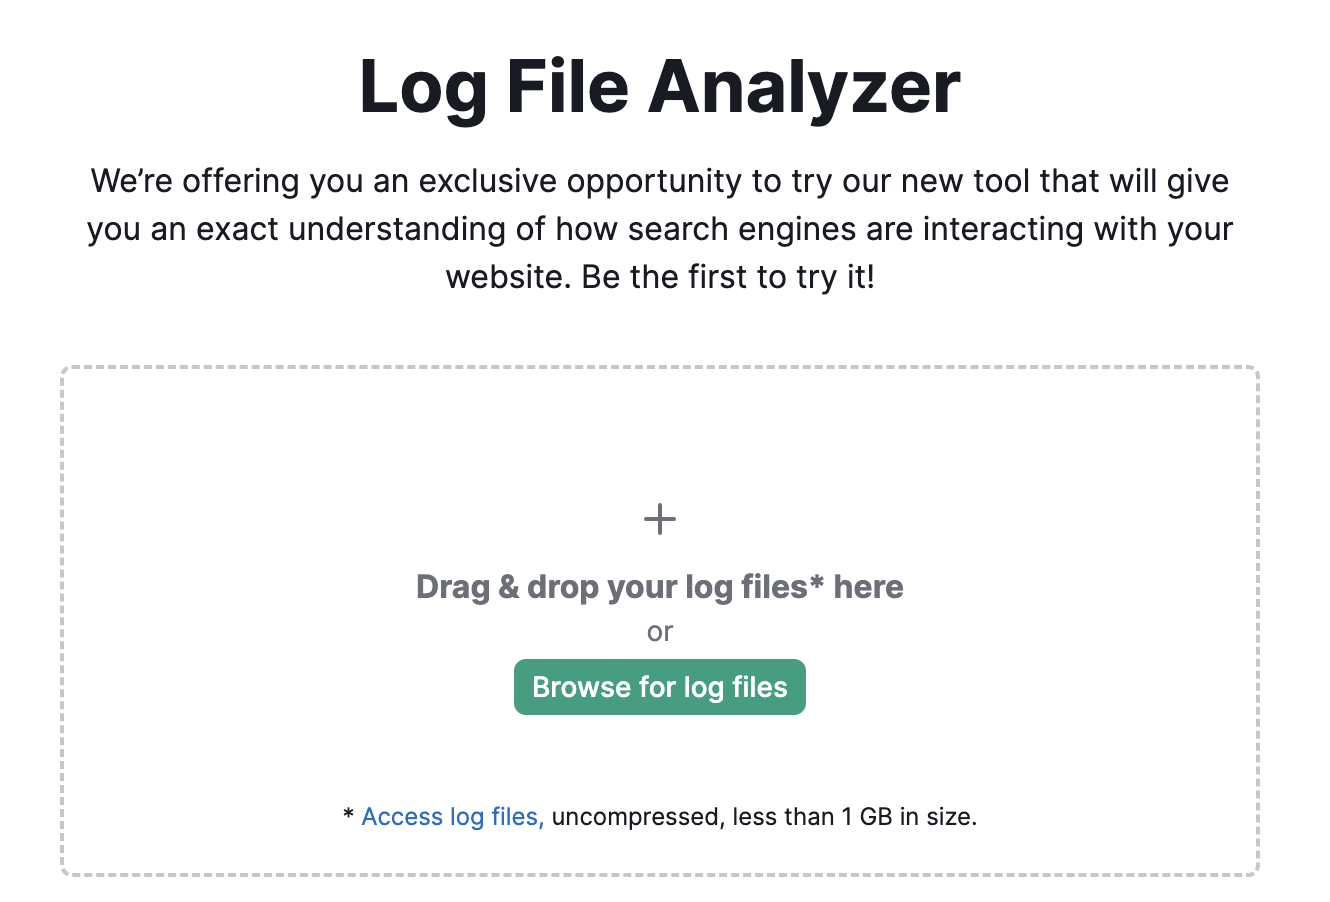 Semrush’s Log File Analyzer tool